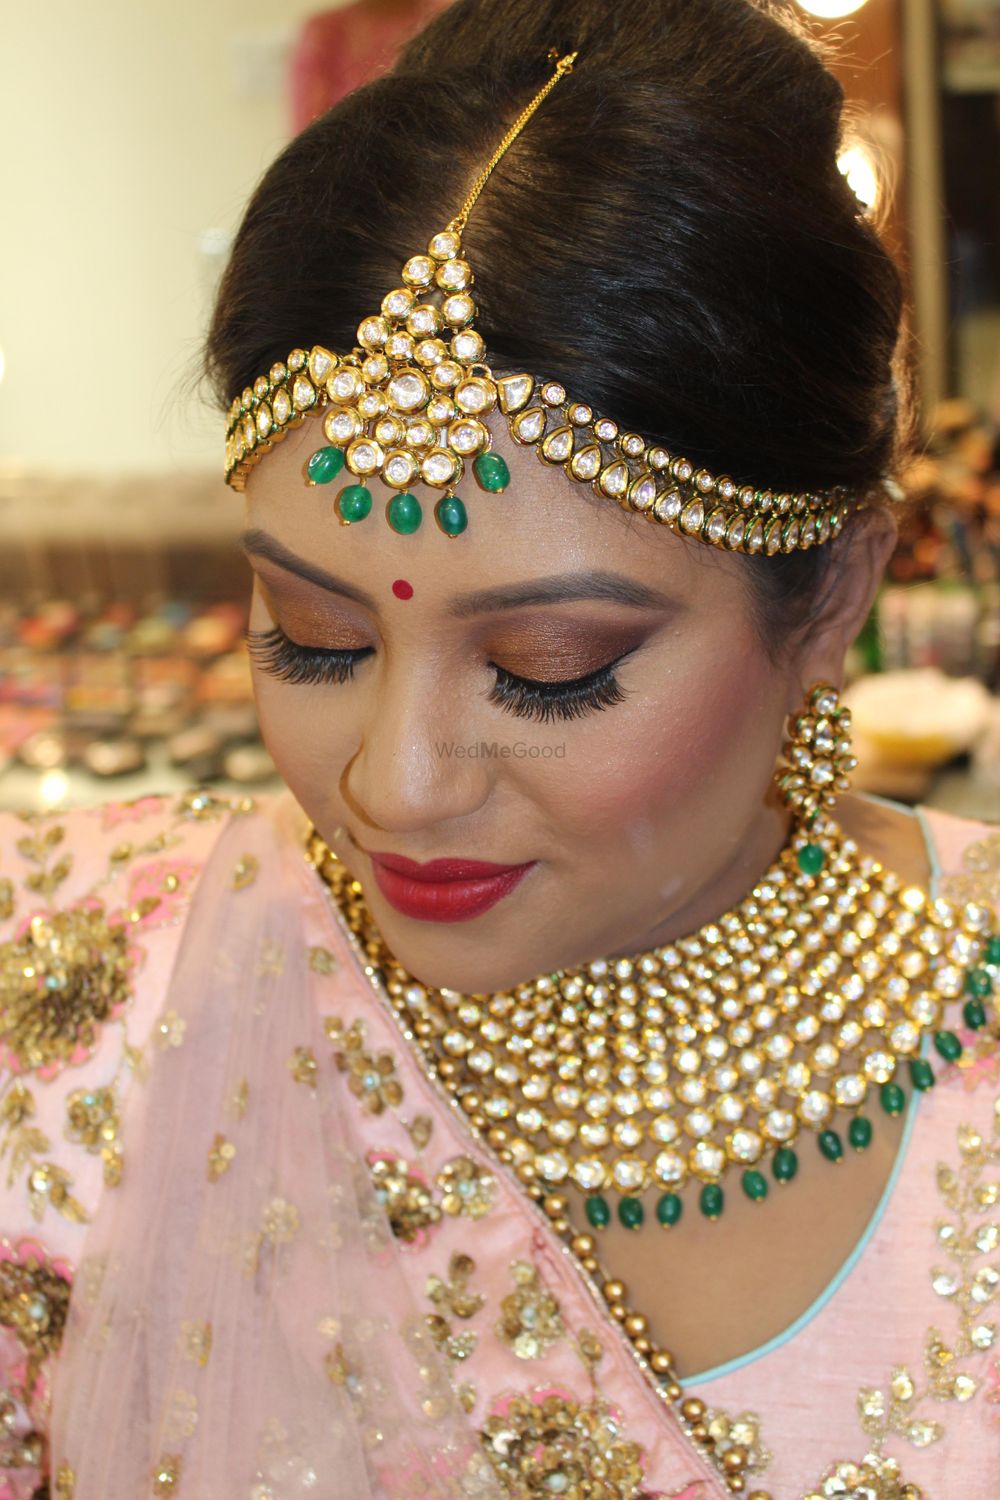 Photo From Akshita's Day Wedding - By Shades Makeup by Shrinkhala